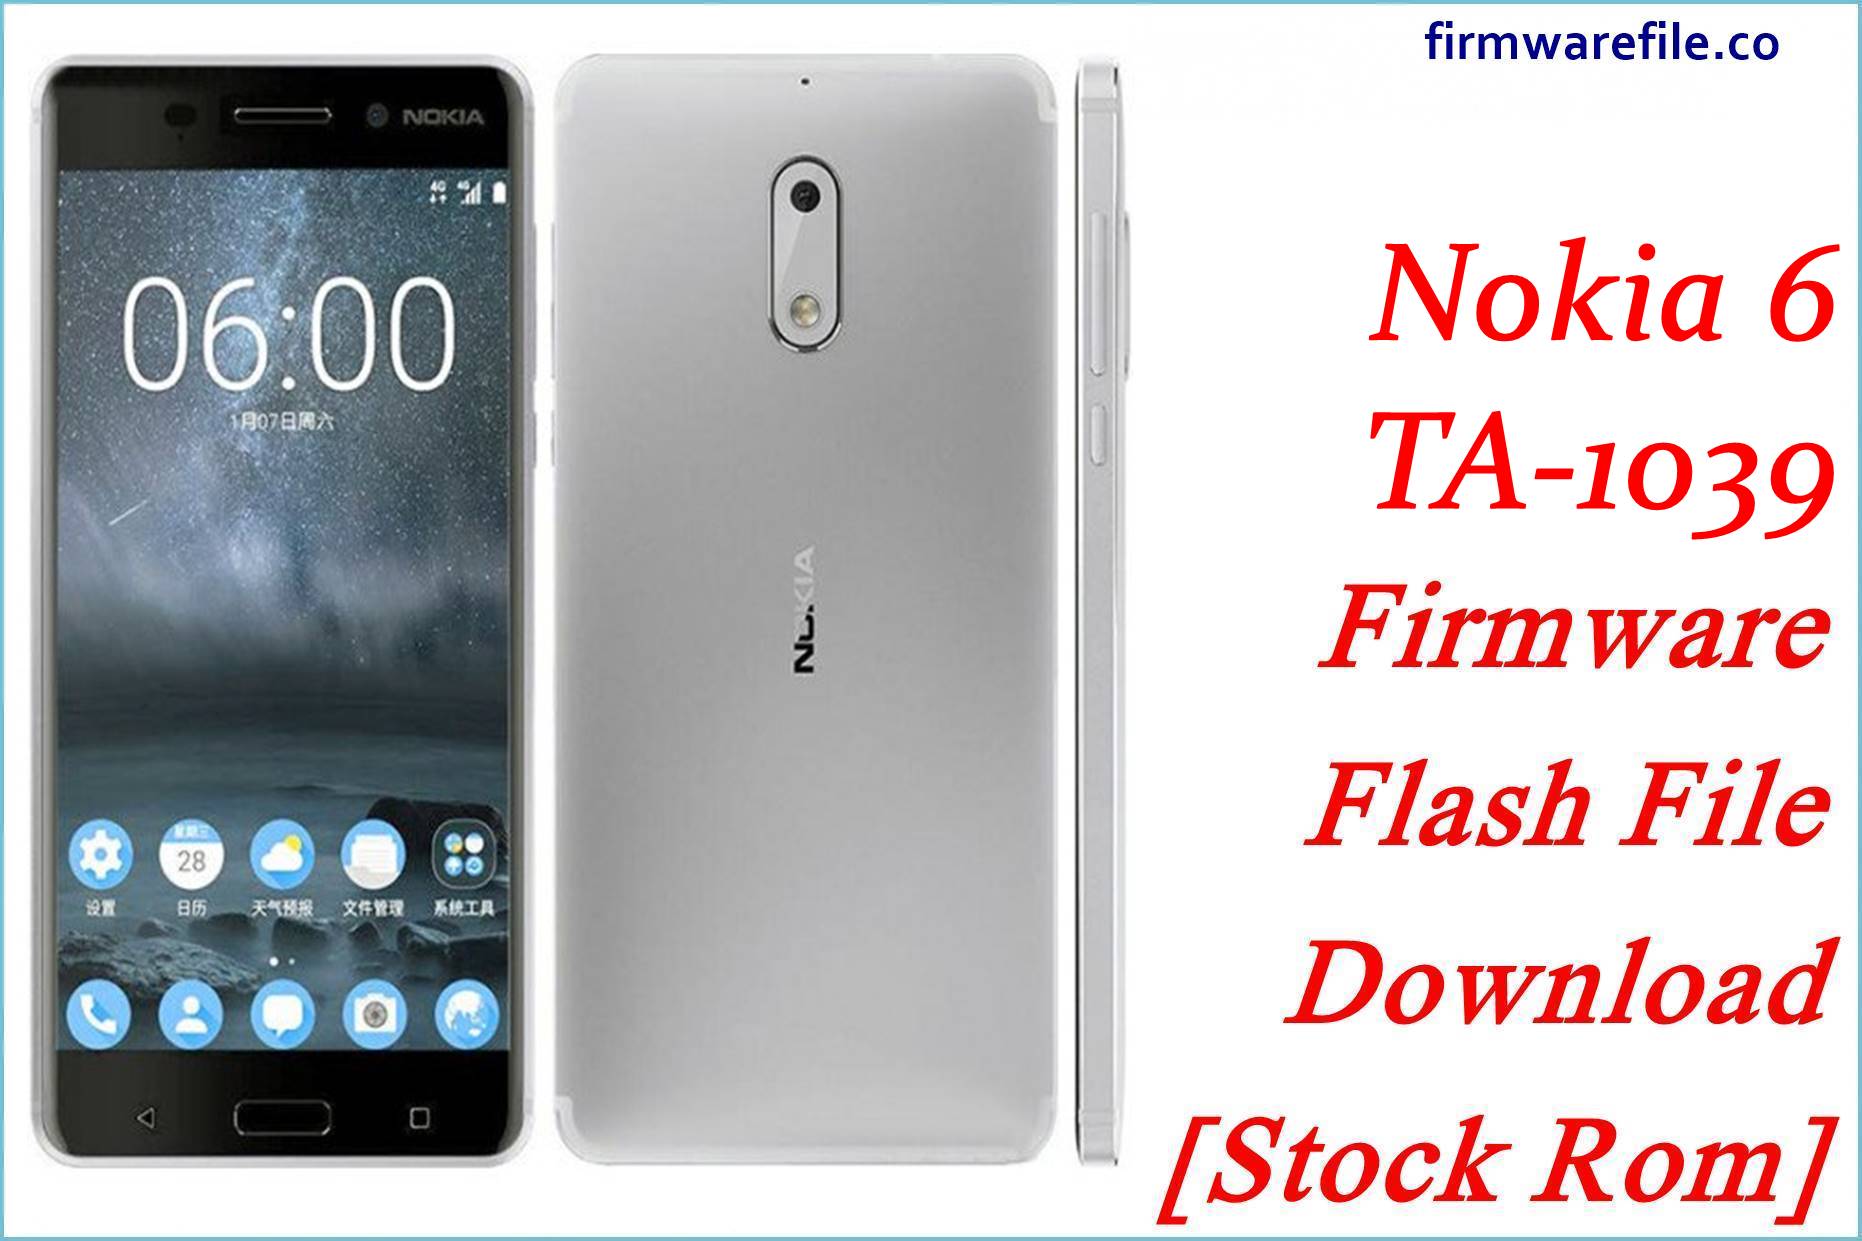 Nokia 6 TA-1039 Firmware Flash File Download [Stock Rom]